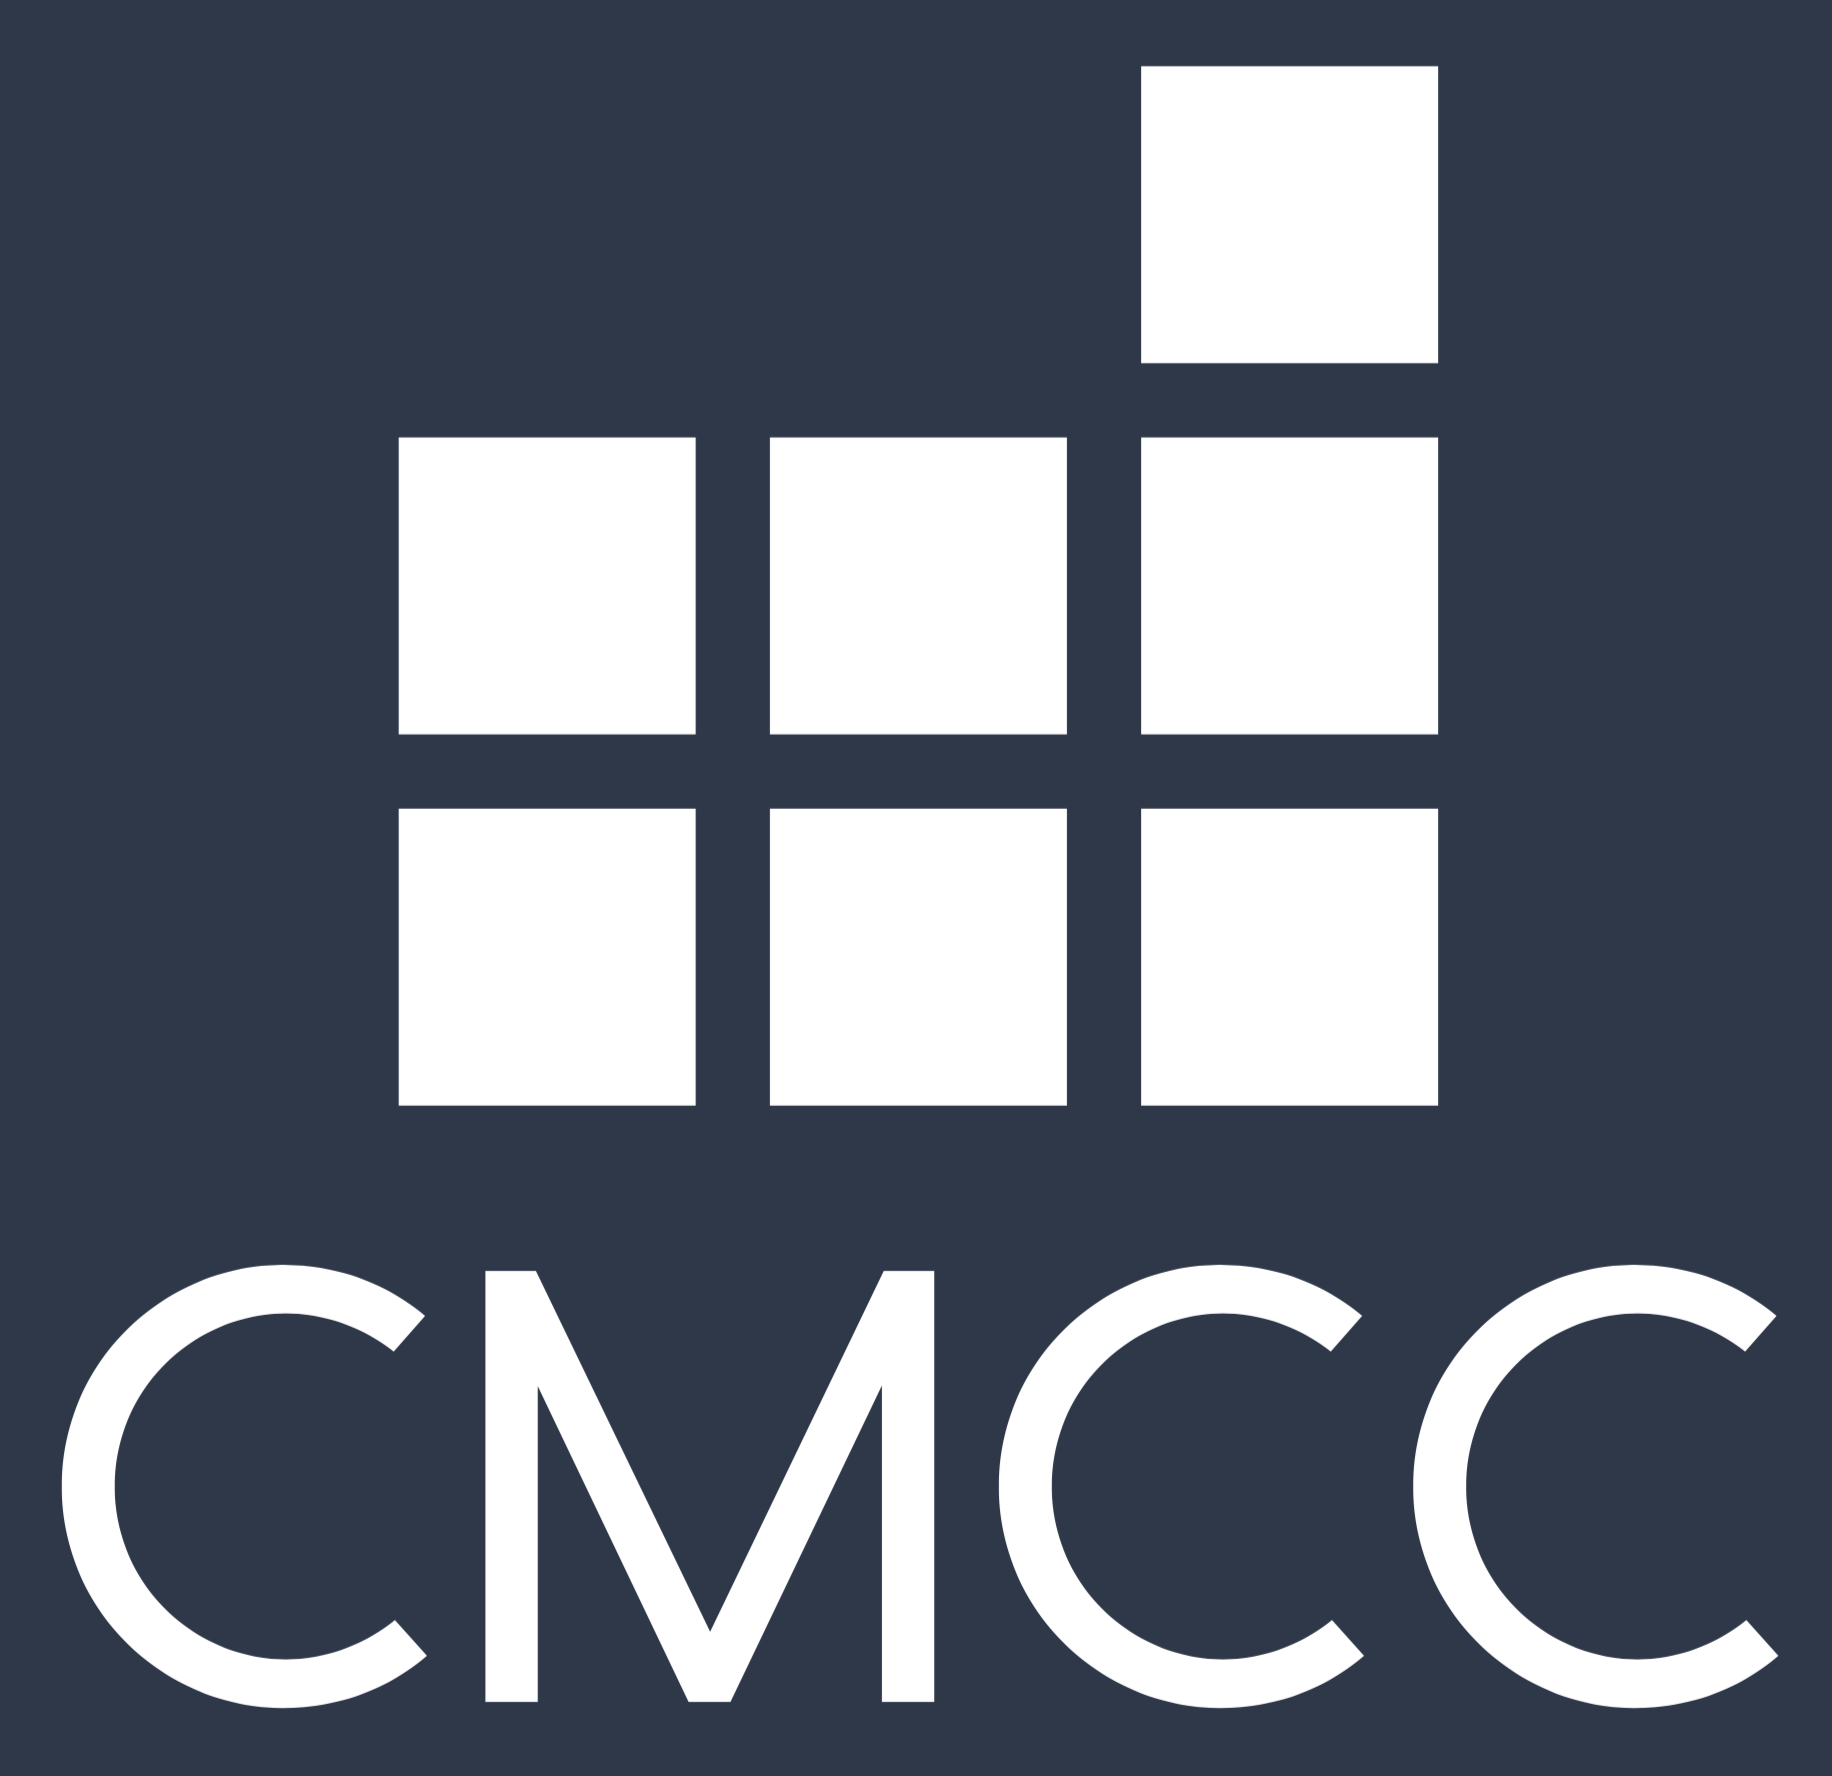 CMCC Global